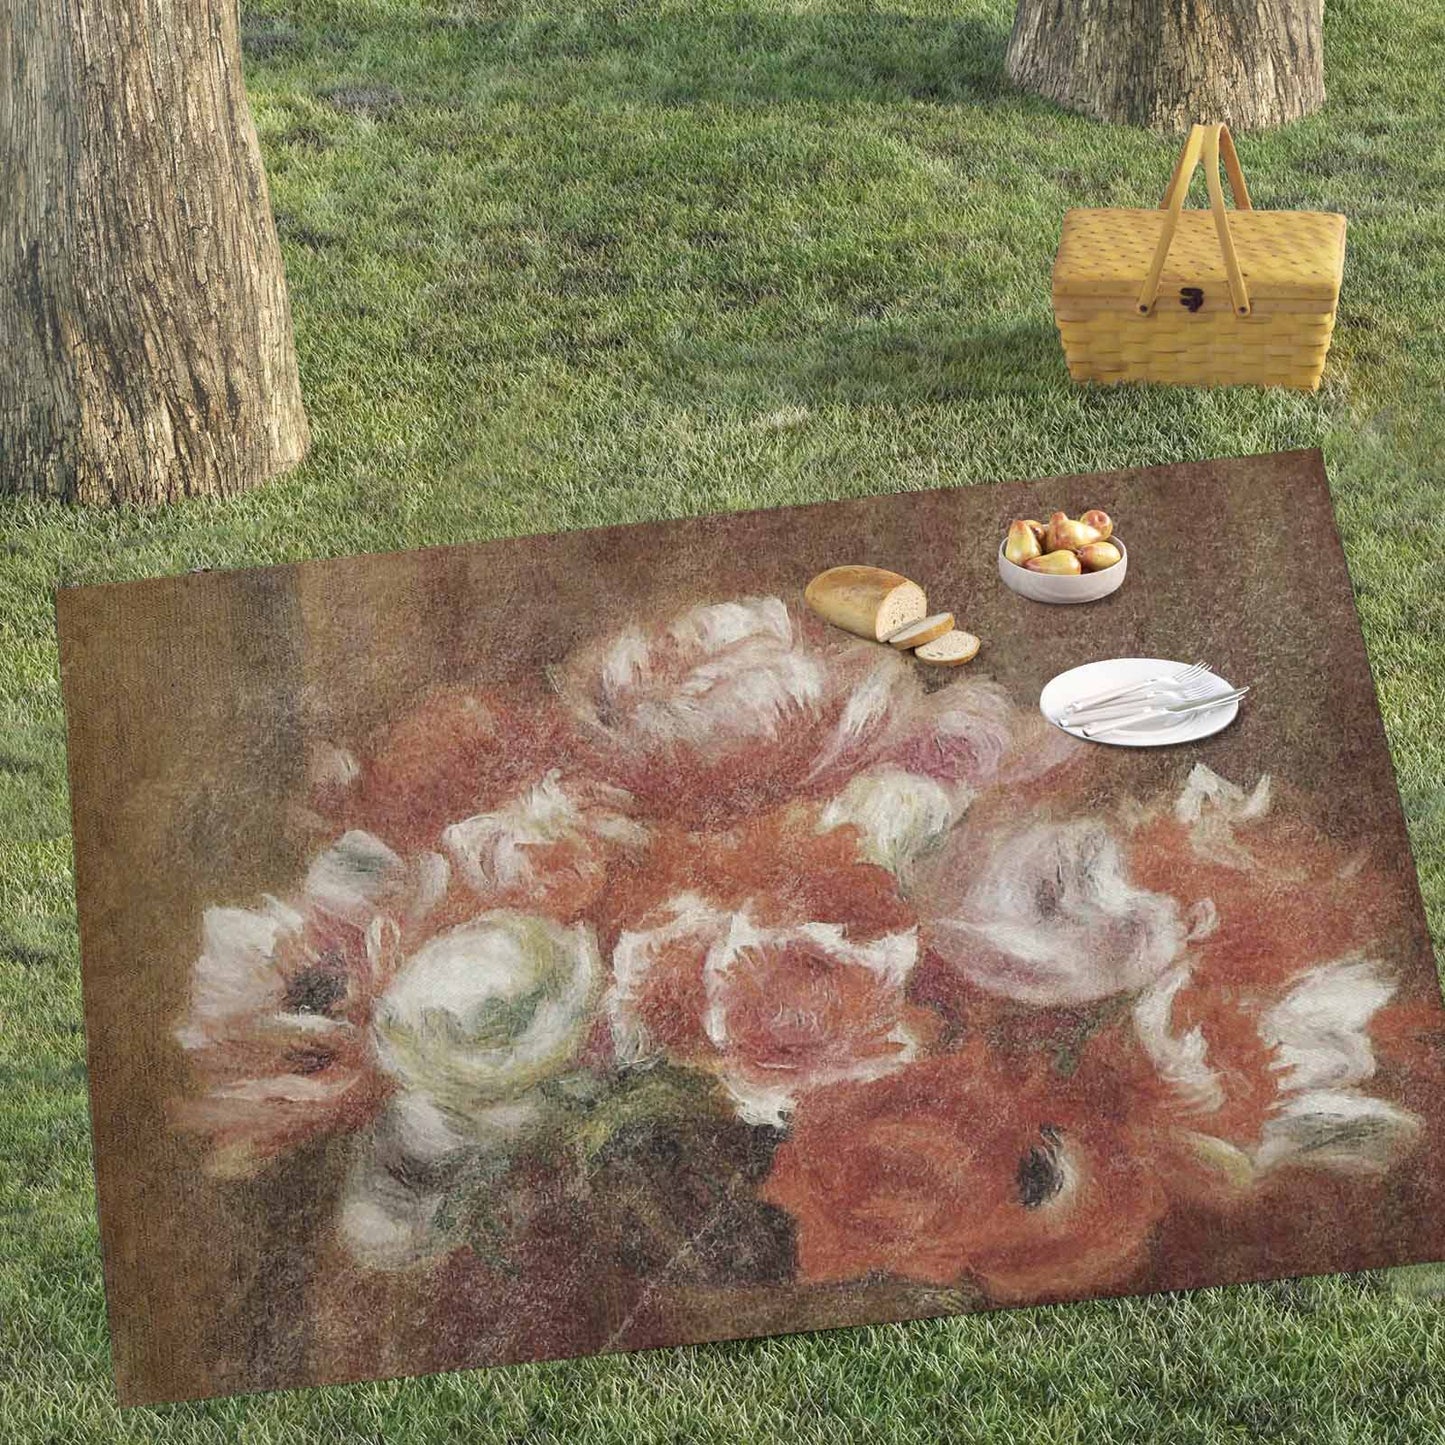 Vintage Floral waterproof picnic mat, 81 x 55in, Design 15